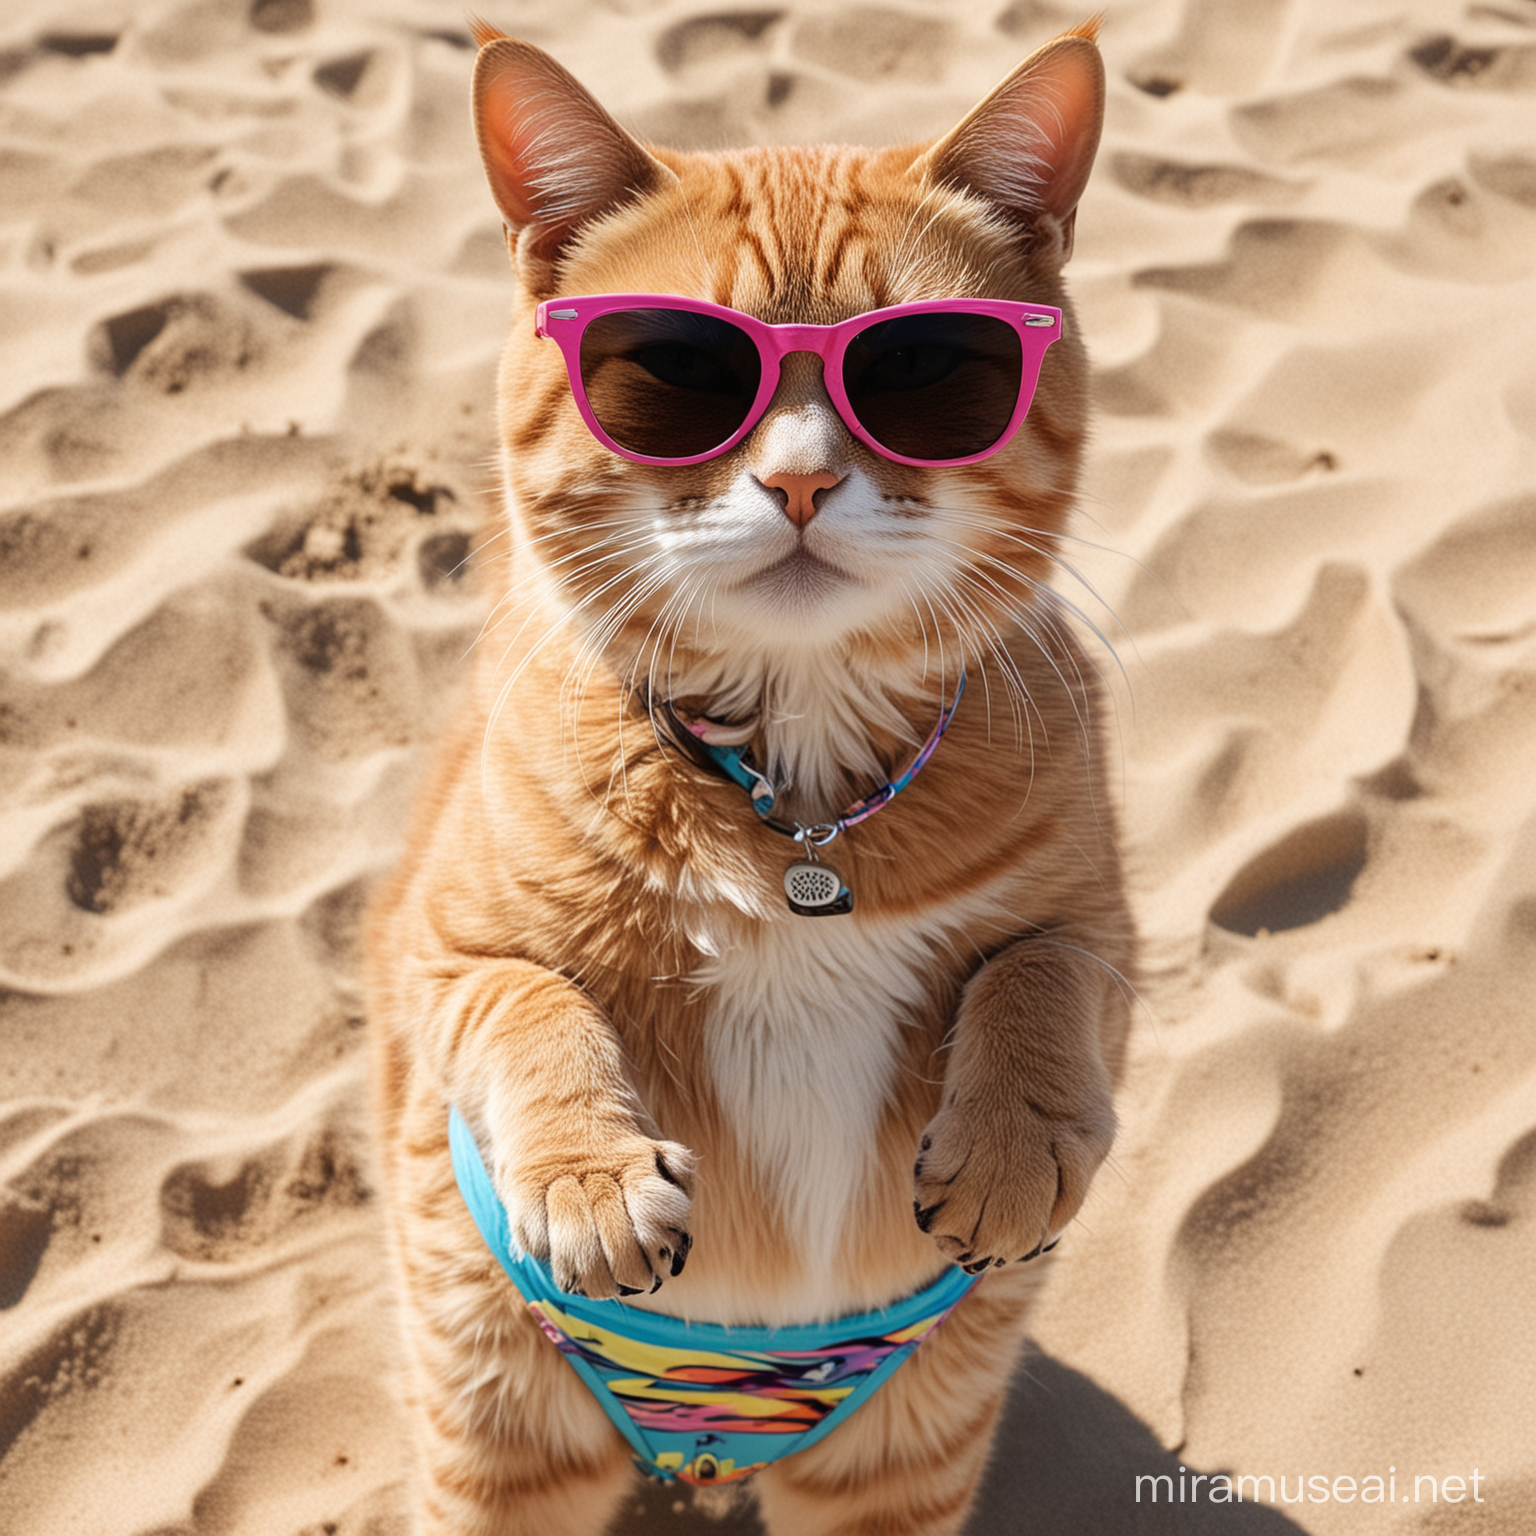 cool cat with sunglasses in bikini